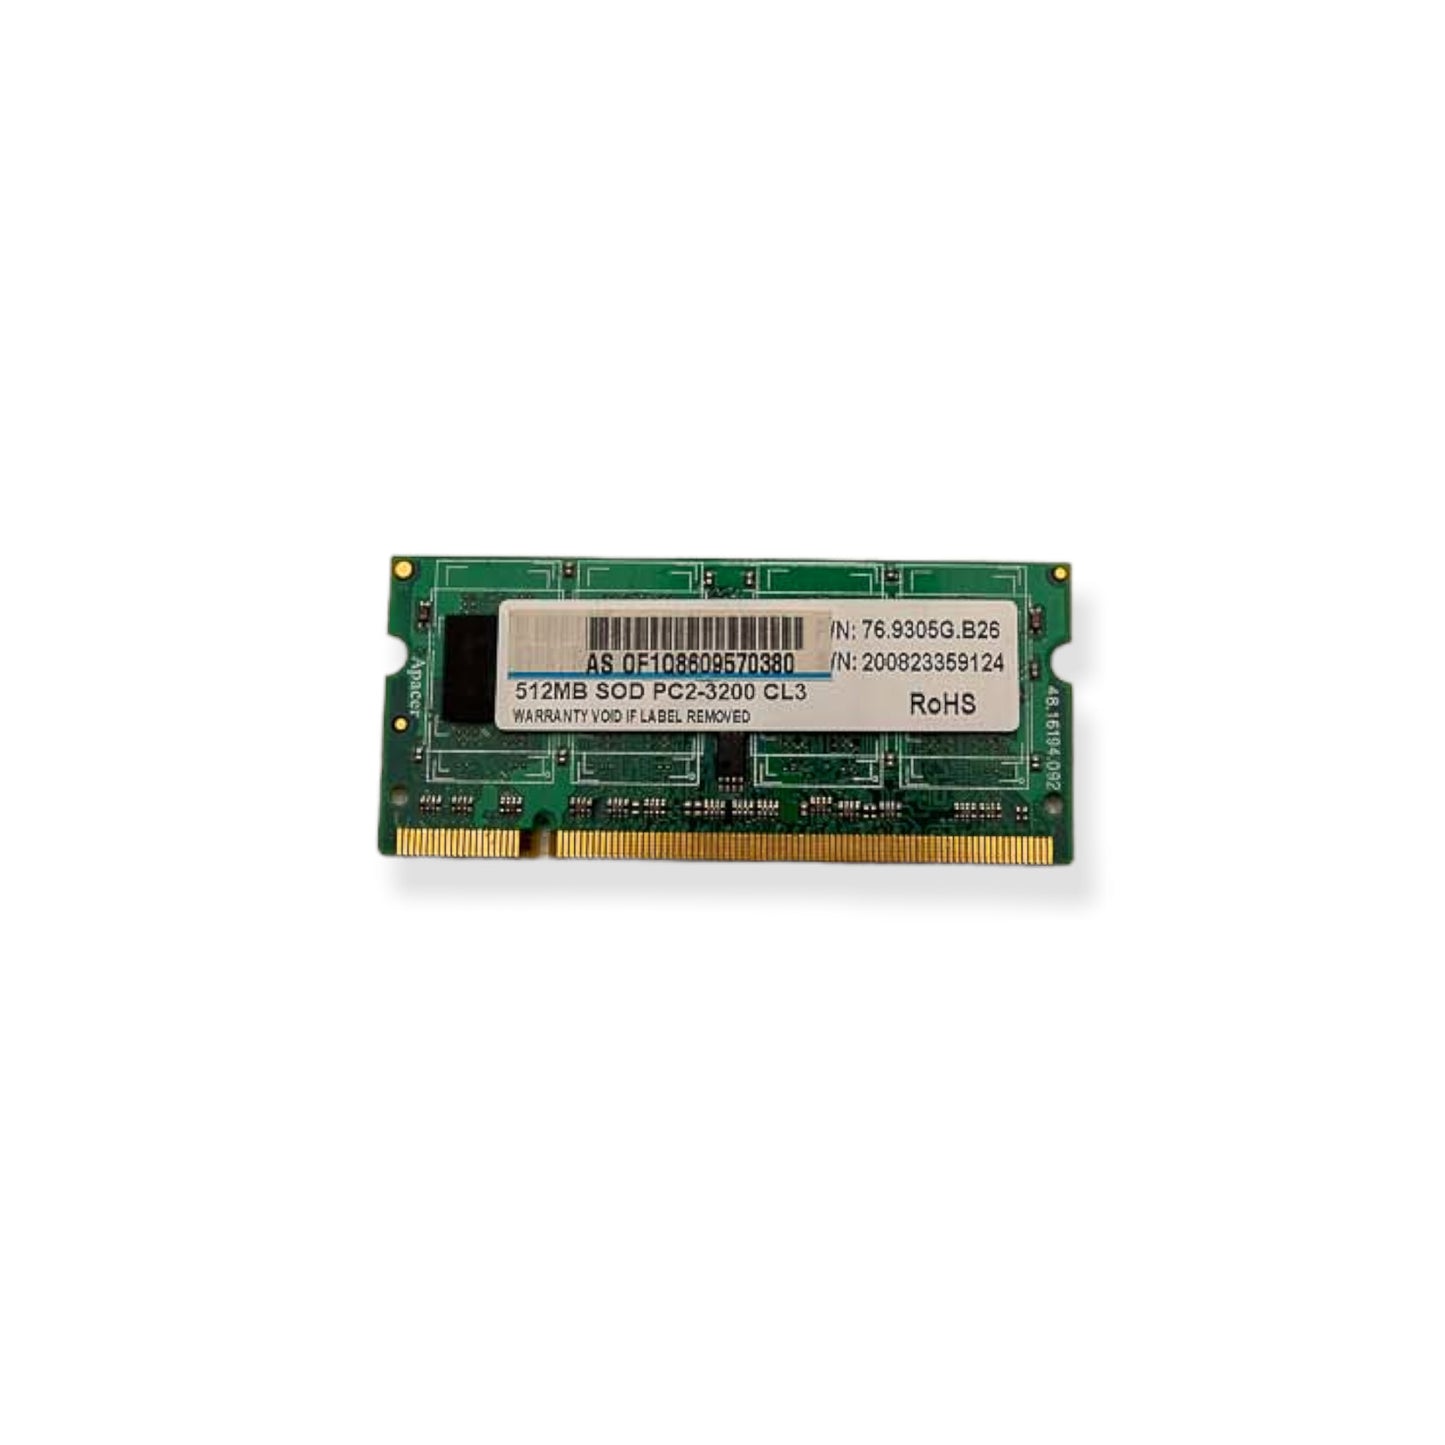 Memória Ram SODIMM 512MB PC2-3200 AS 0F1Q8609570380